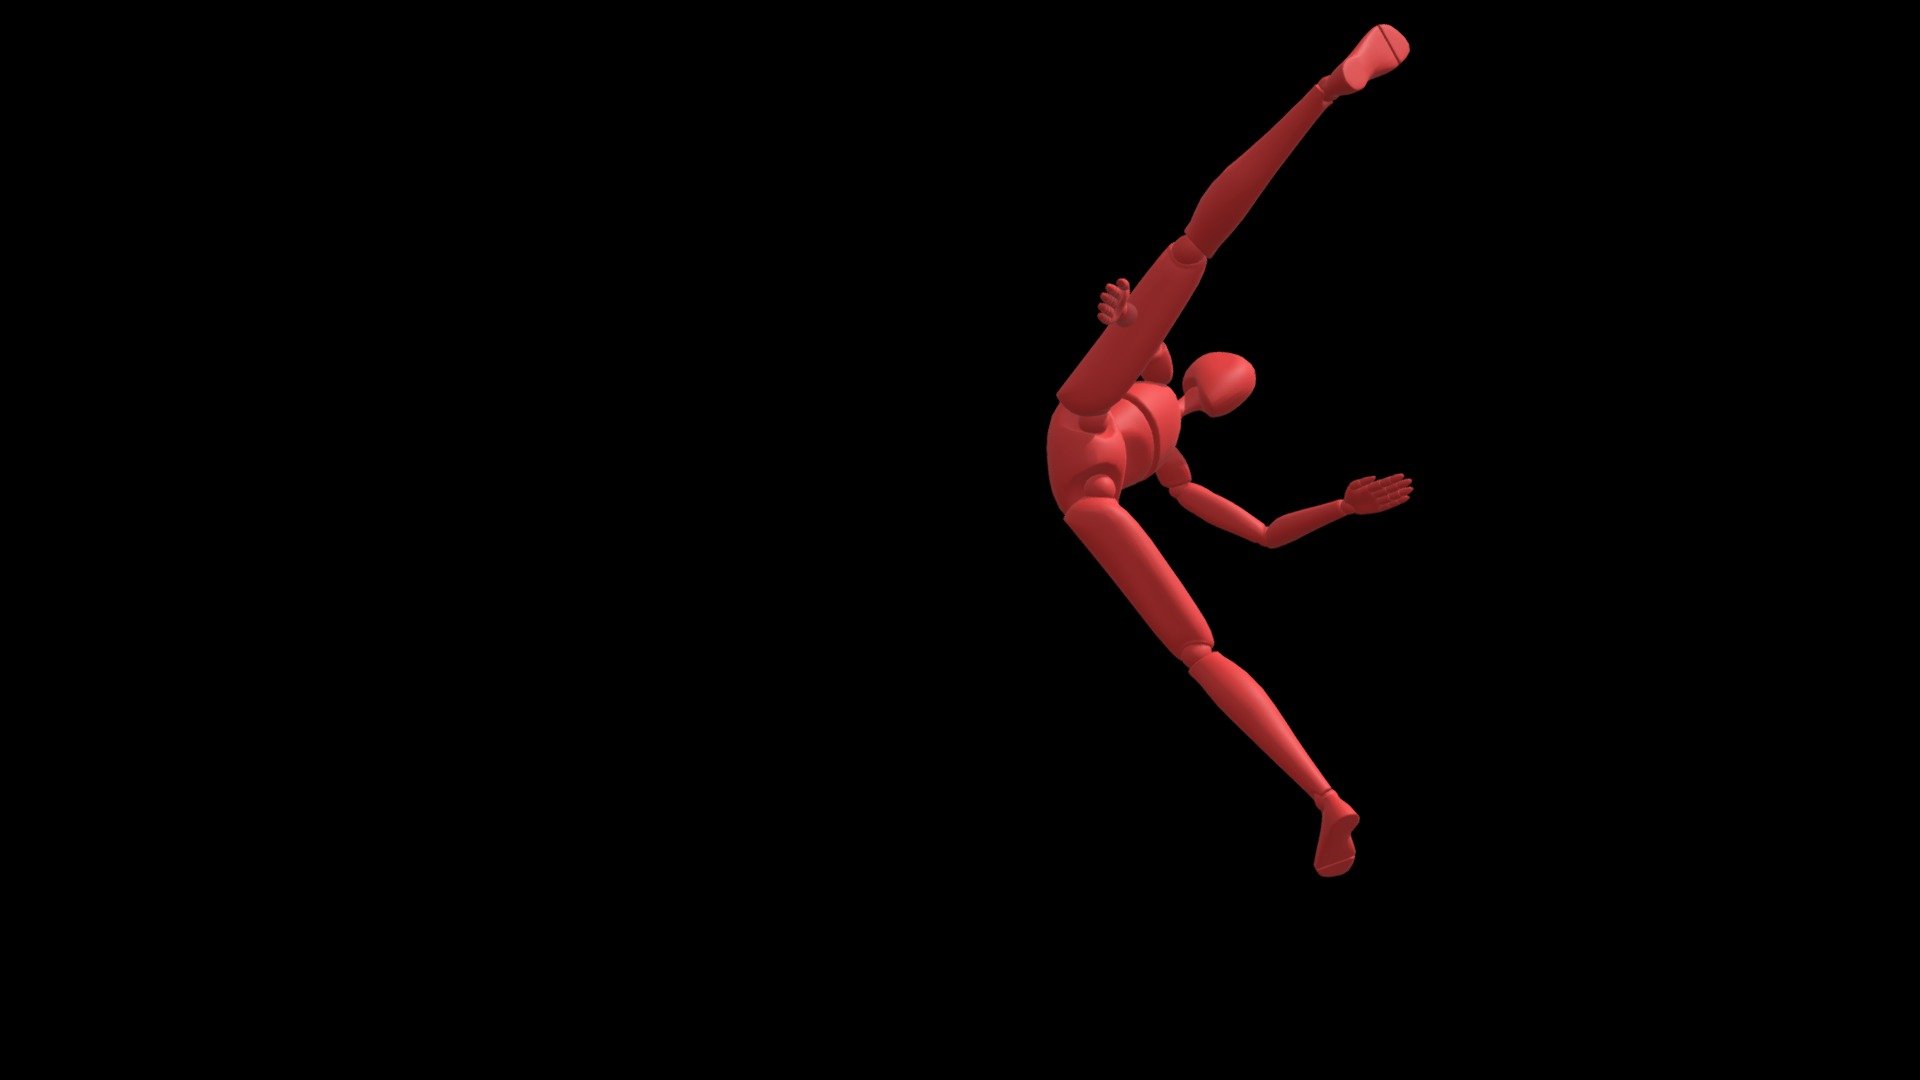 BUTTERFLY TWISTROUND  -  Origin: Sport Karate  -  Performer: JayR DeGuzman

1 TakeOff: Mega

2 Tilt: Flat

3 Torque: 360-420

4 Transformation: RoundKick

5 TouchDown: Mega / Complete - Butterfly Twist Round - 3D model by Chris.DeVera 3d model